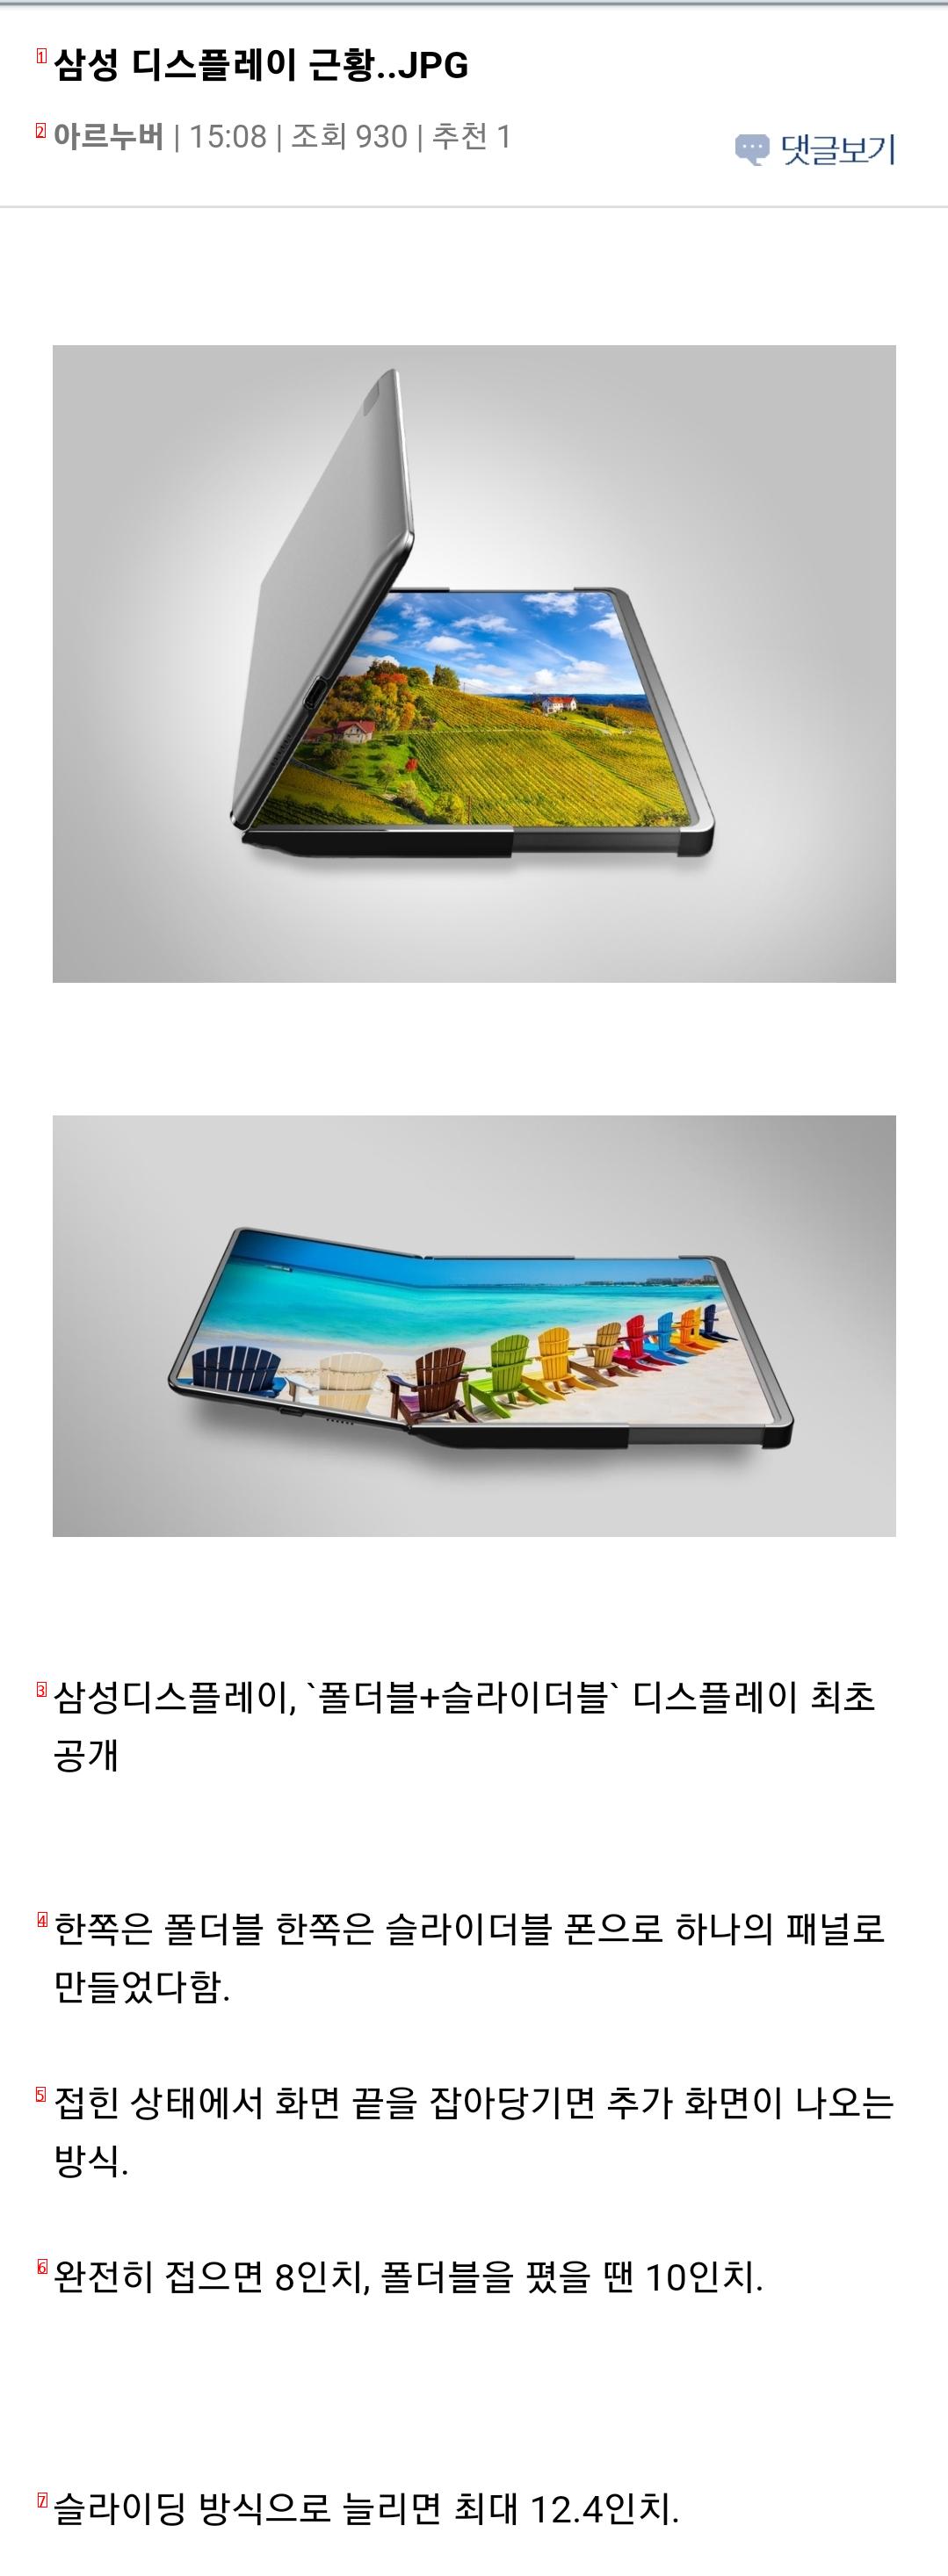 Samsung Display Updates